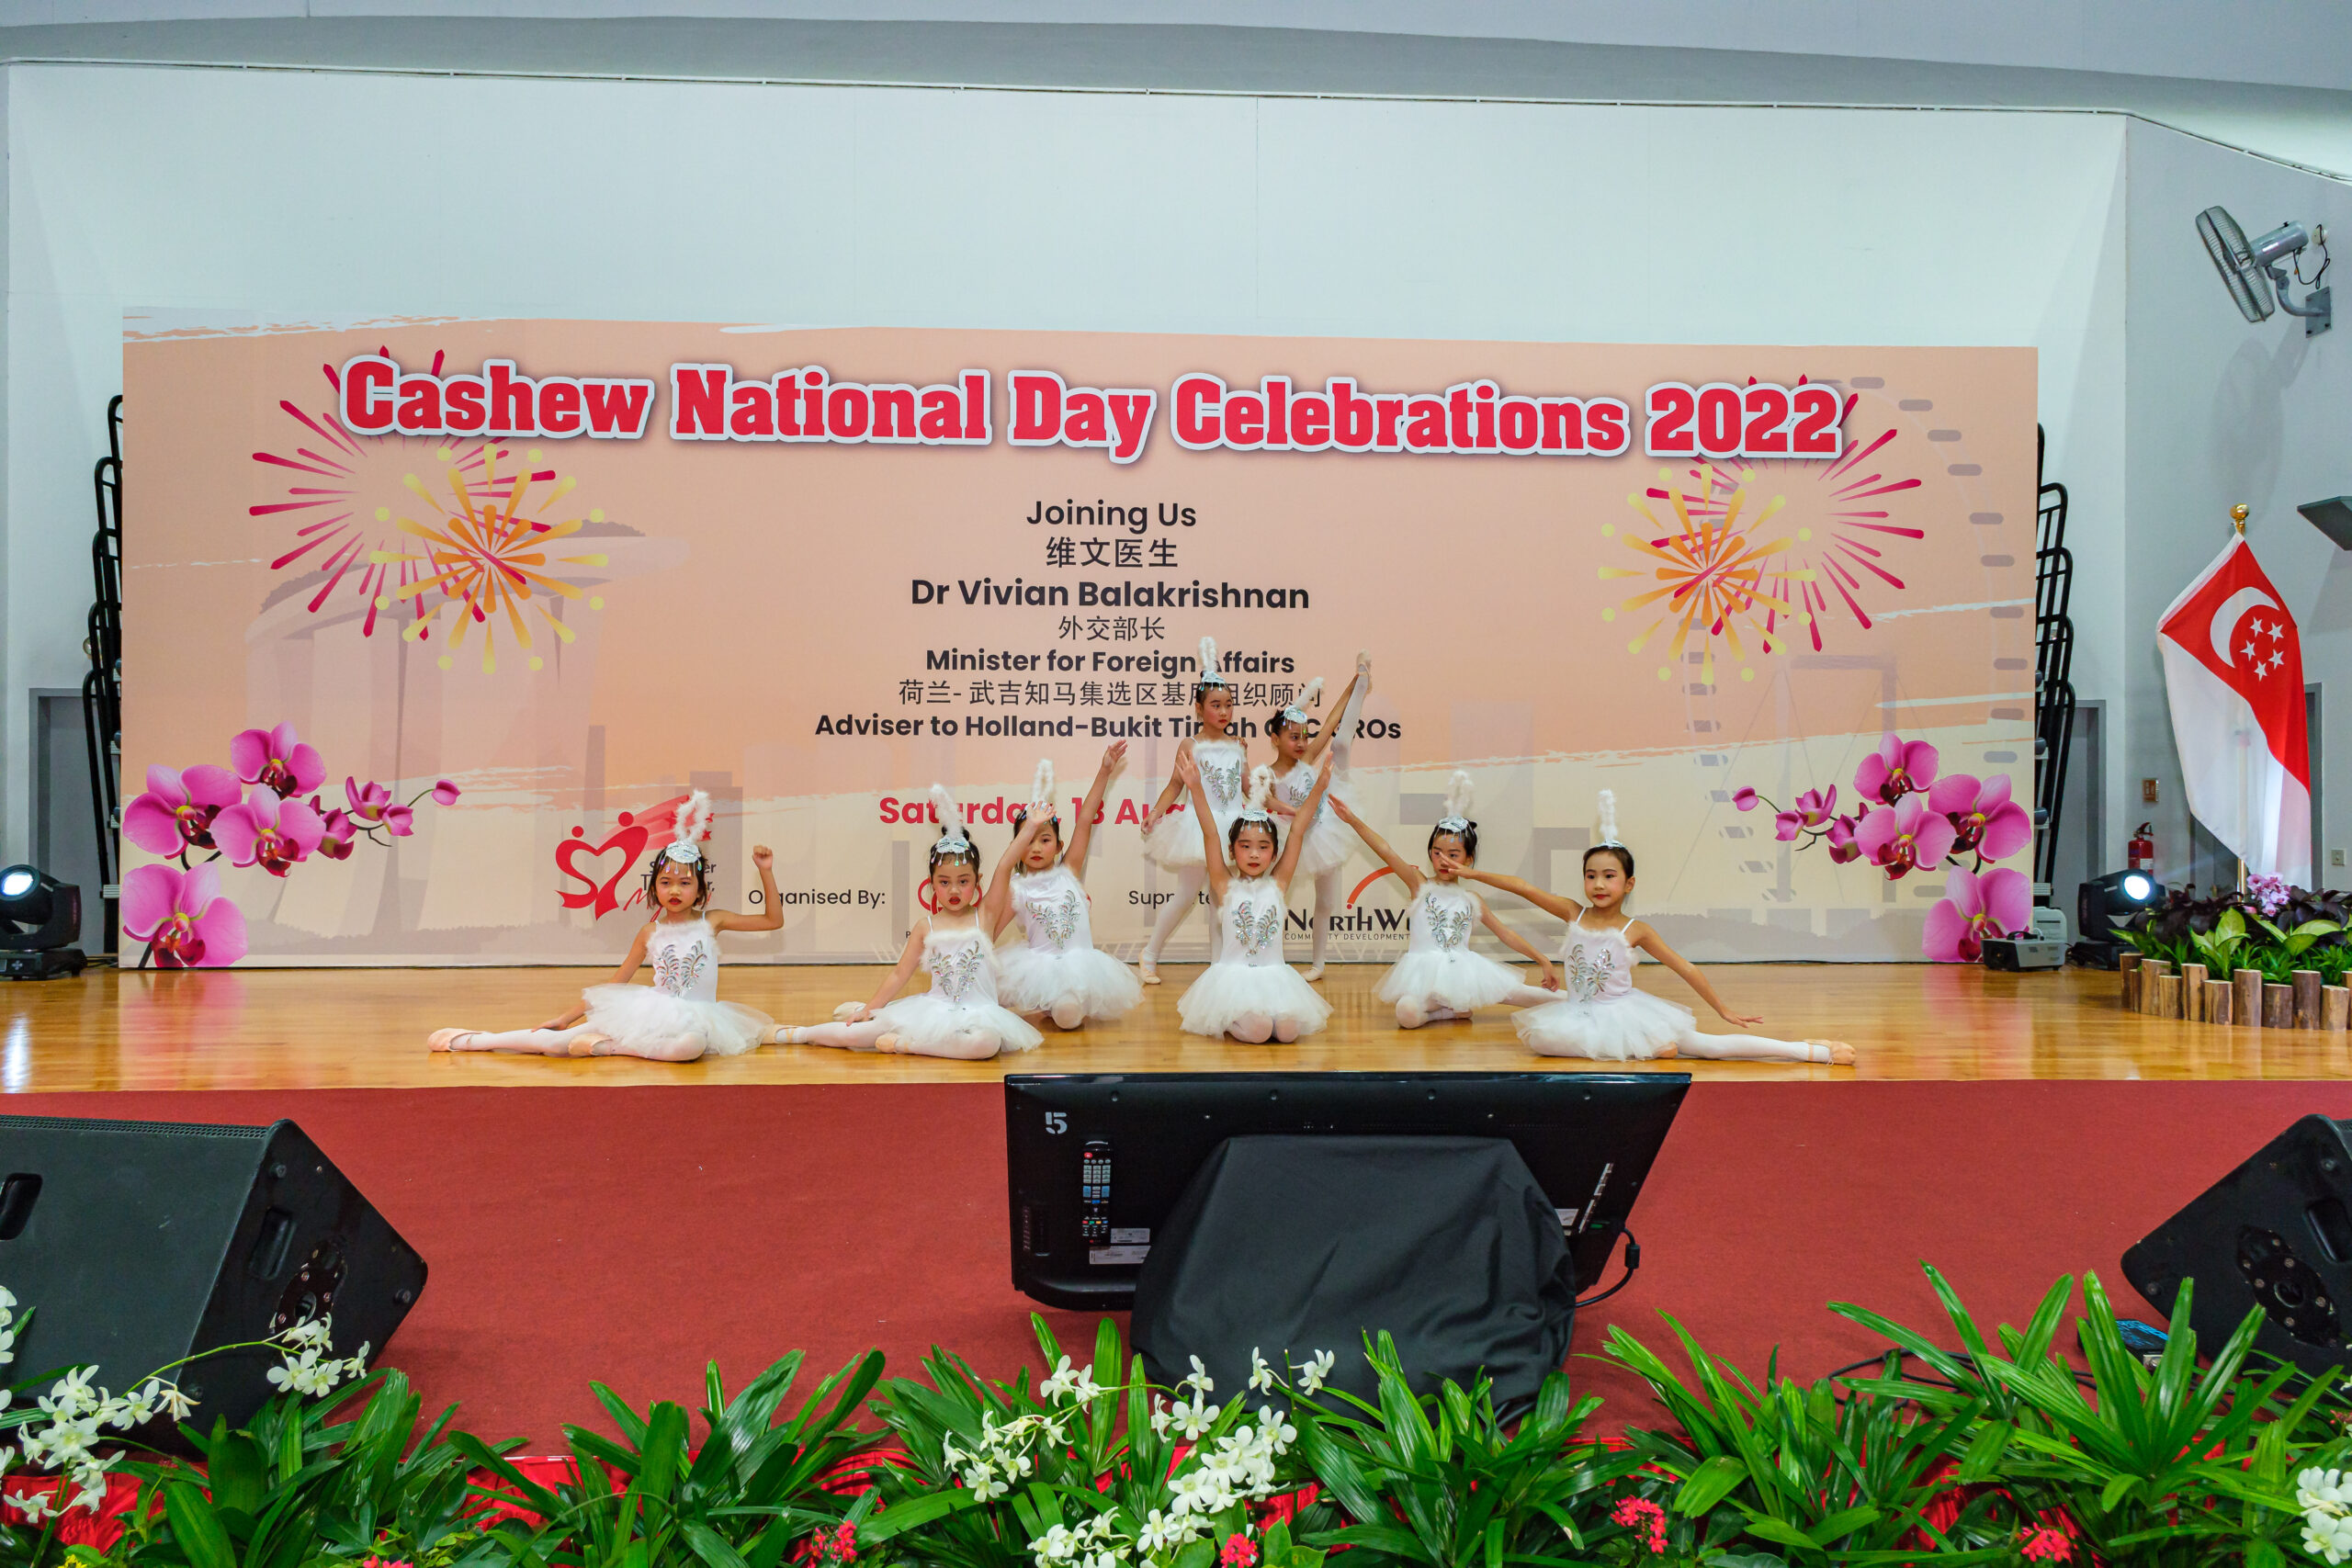 Cashew National Day Celebrations - 5